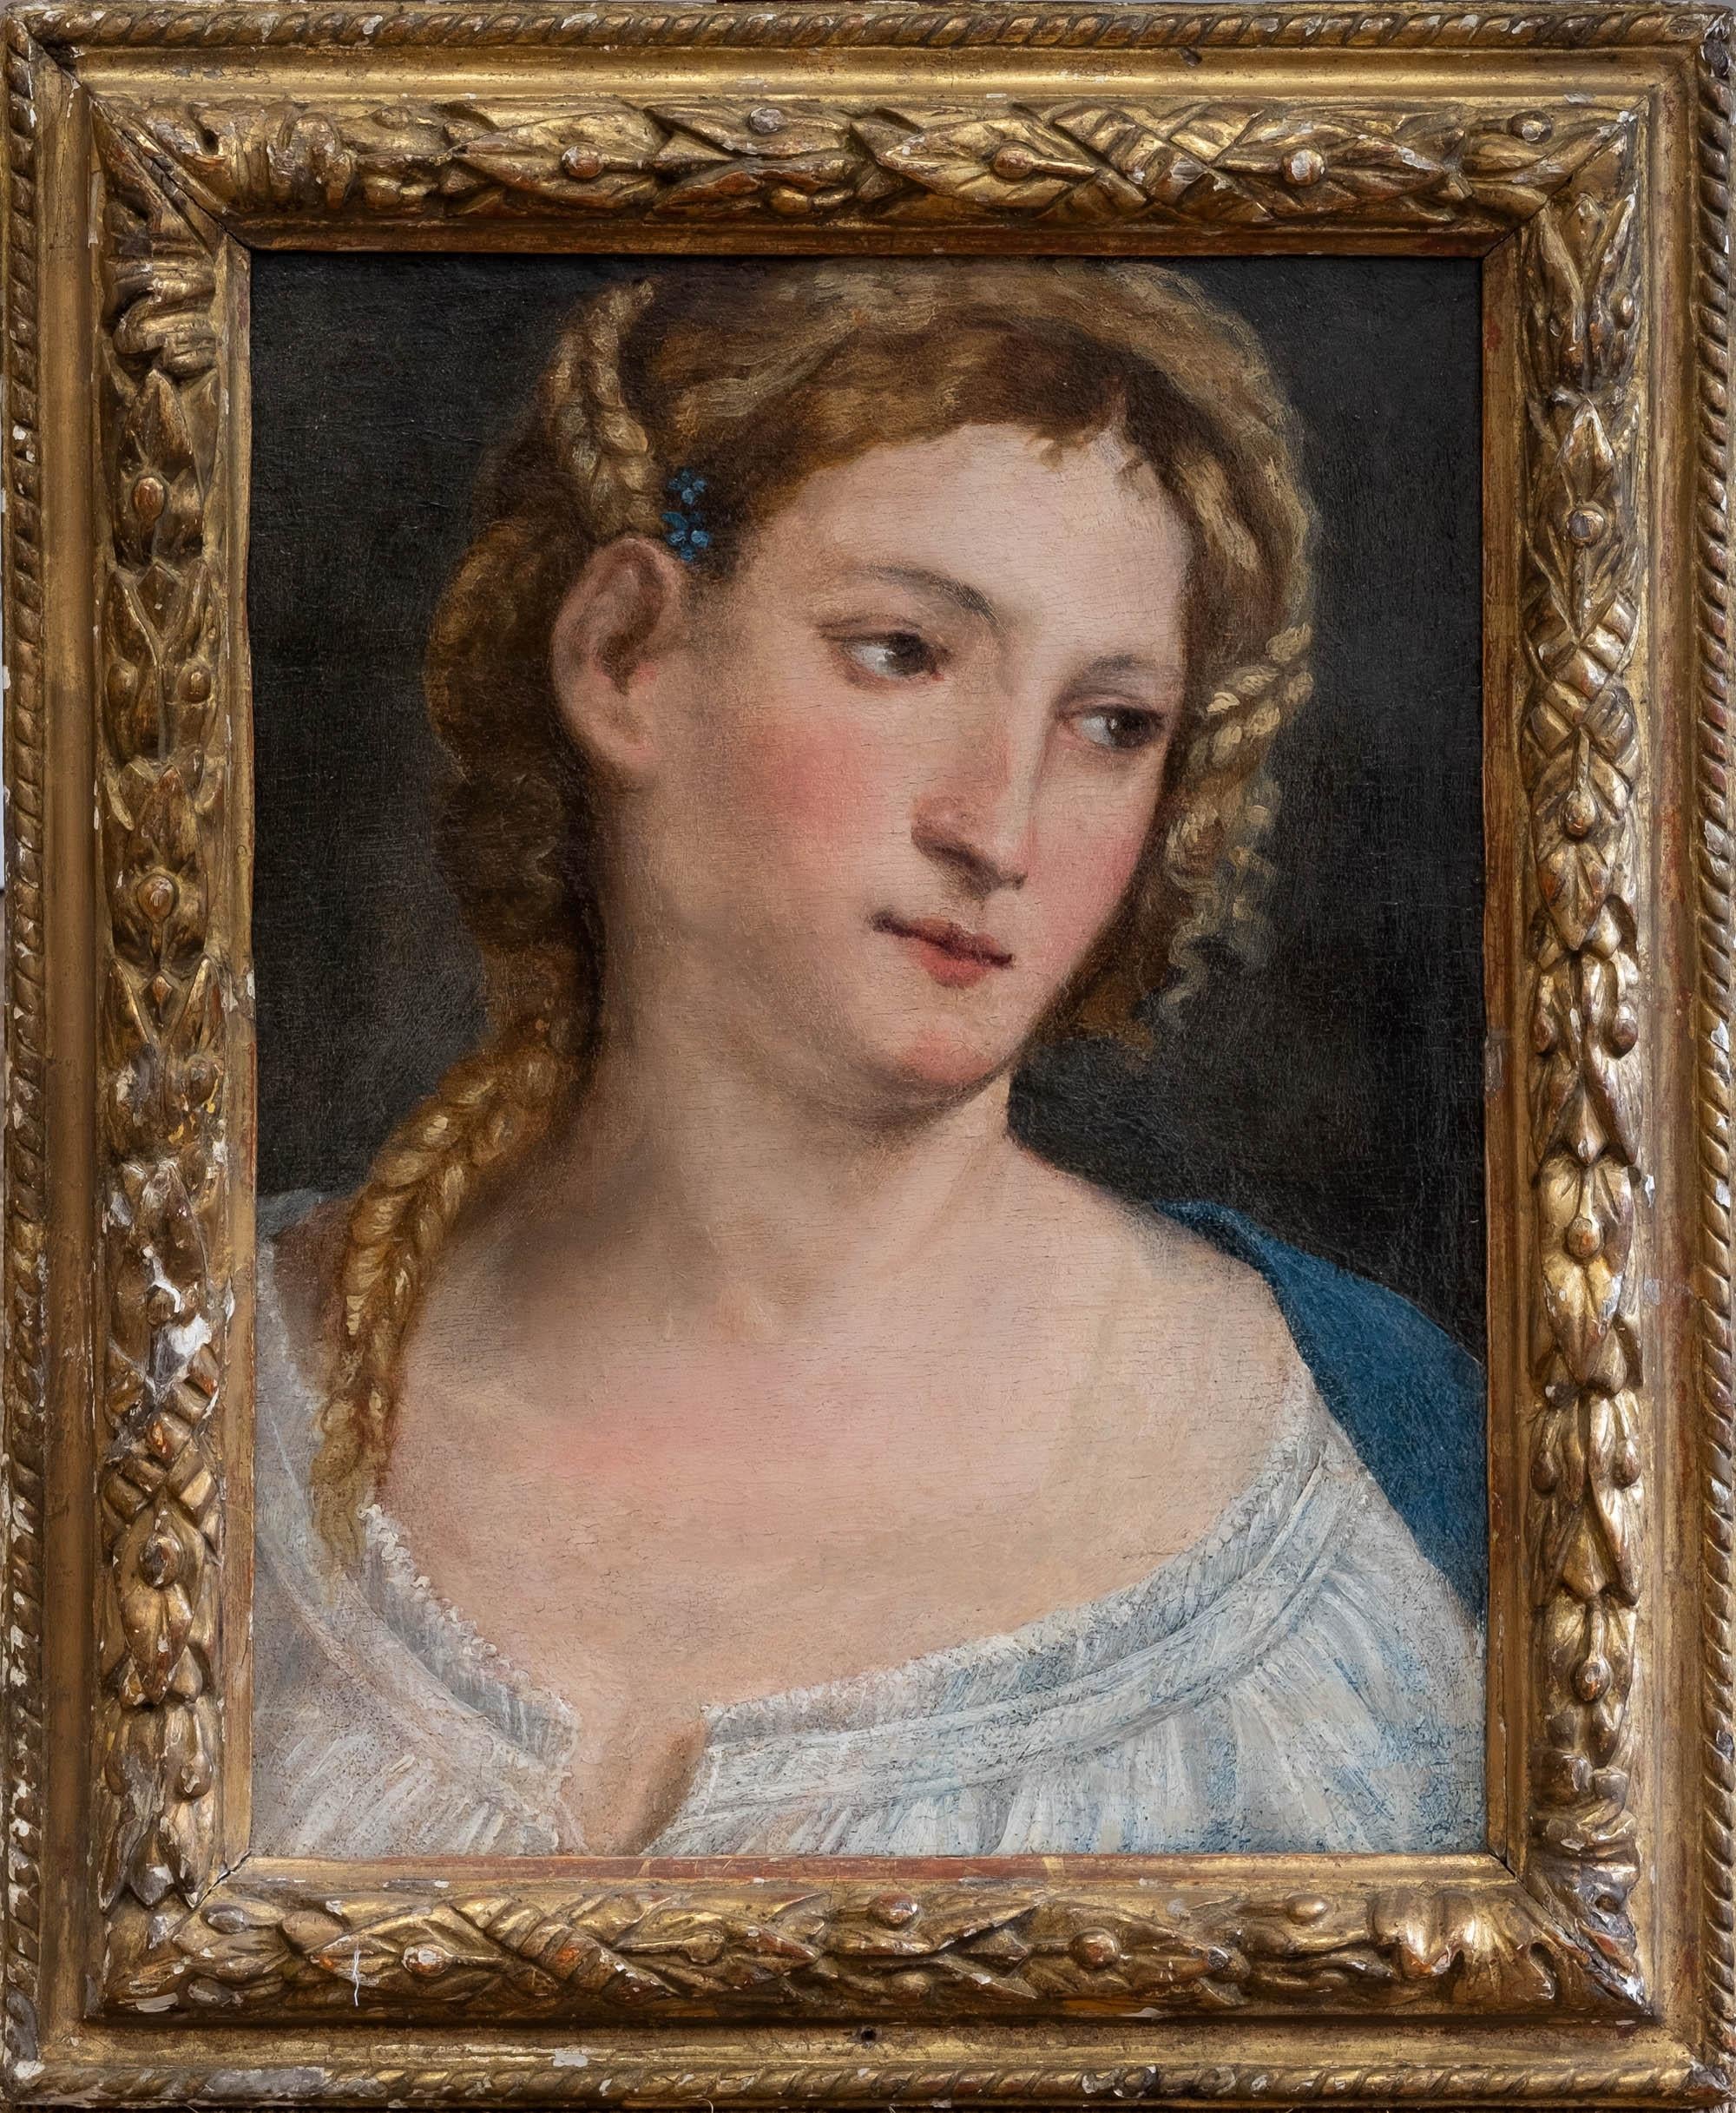 Paris Bordone Figurative Painting - 16th Century Italian Renaissance Extremely Rare Oil Painting Portrait of a Lady